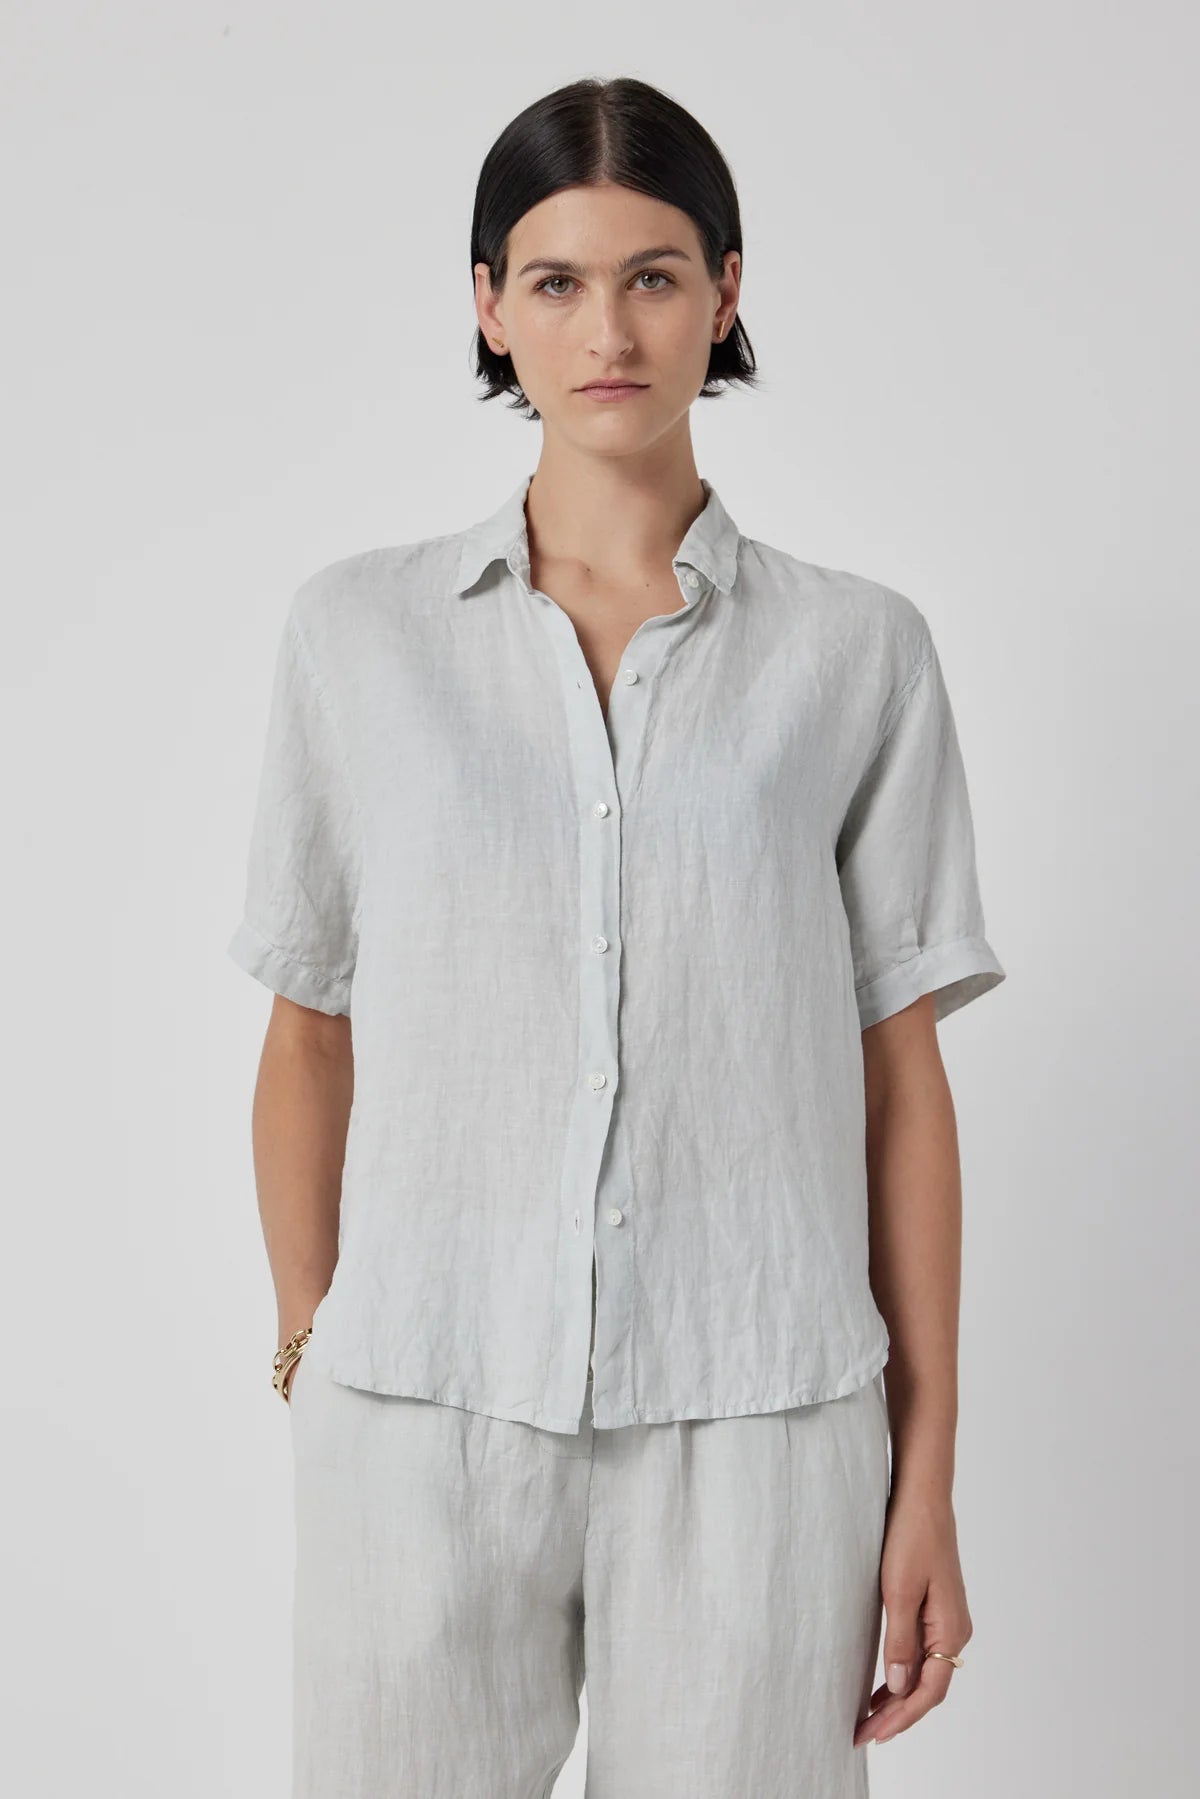 Velvet Claremont Linen Button Up Shirt